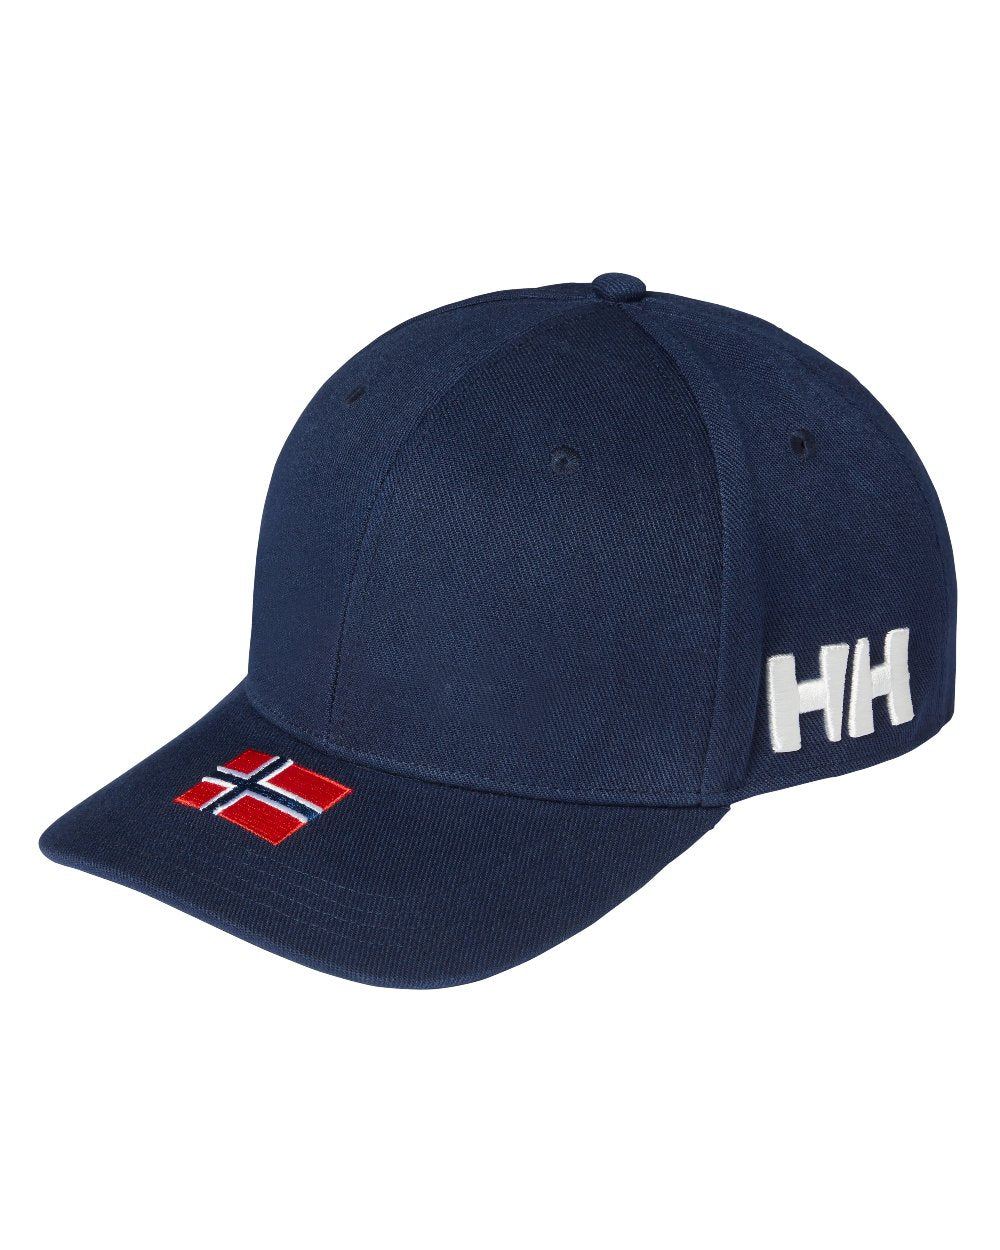 Navy Nsf coloured Helly Hansen Brand Cap on white backlground 